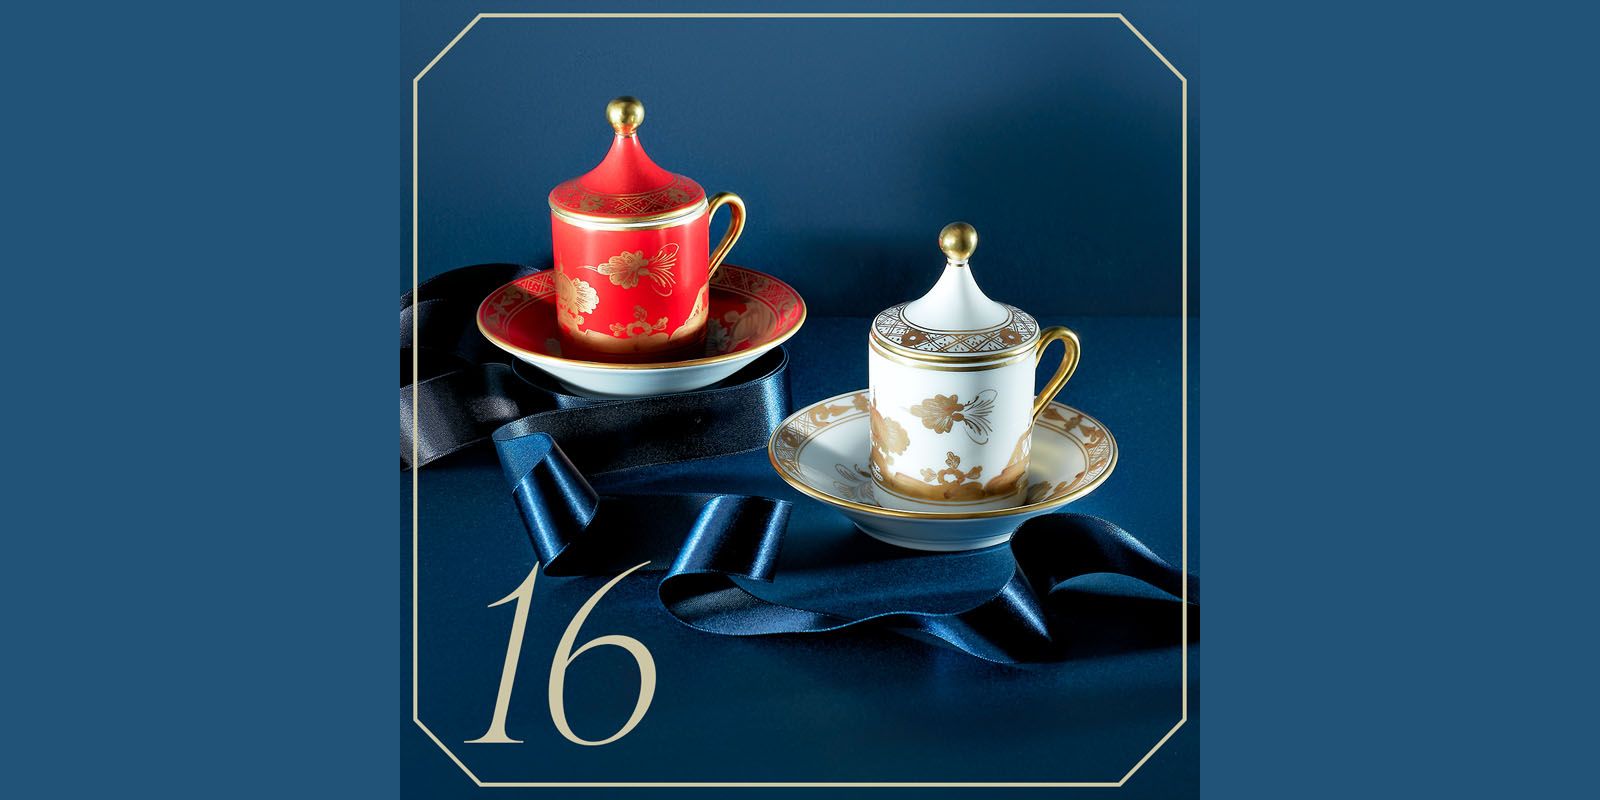 HOLIDAY#16】ジノリ1735の“デミタスカップ”でテーブルにオリエンタルな風を